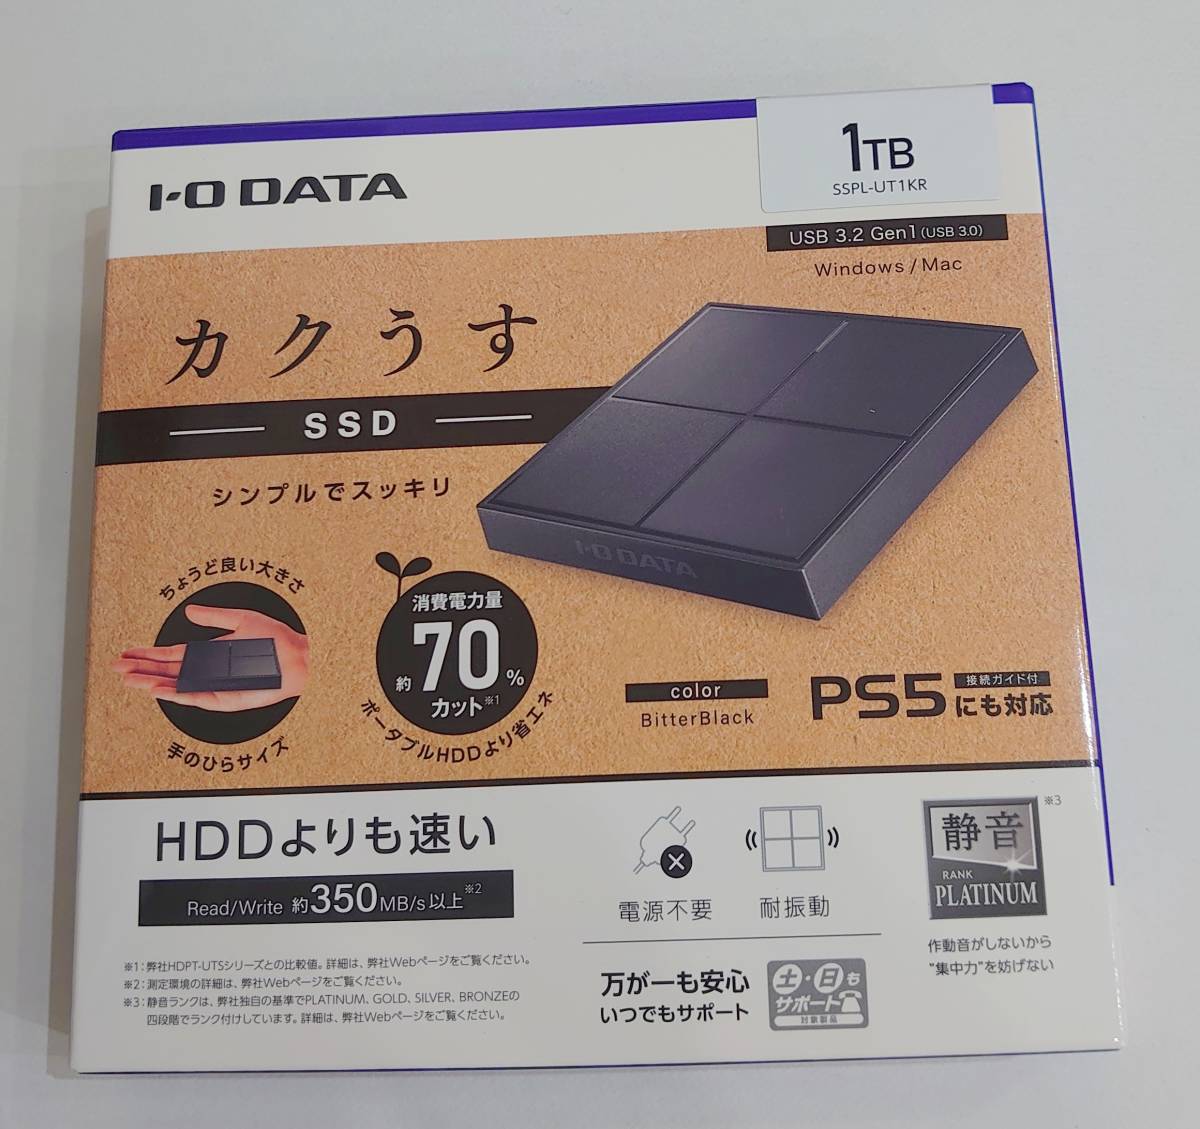 I-O DATA カクうす ポータブルSSD 1TB SSPL-UT1KR 新品未開封 PS5/PS4/Mac対応 USB3.2(Gen1) 静音 軽量 コンパクト